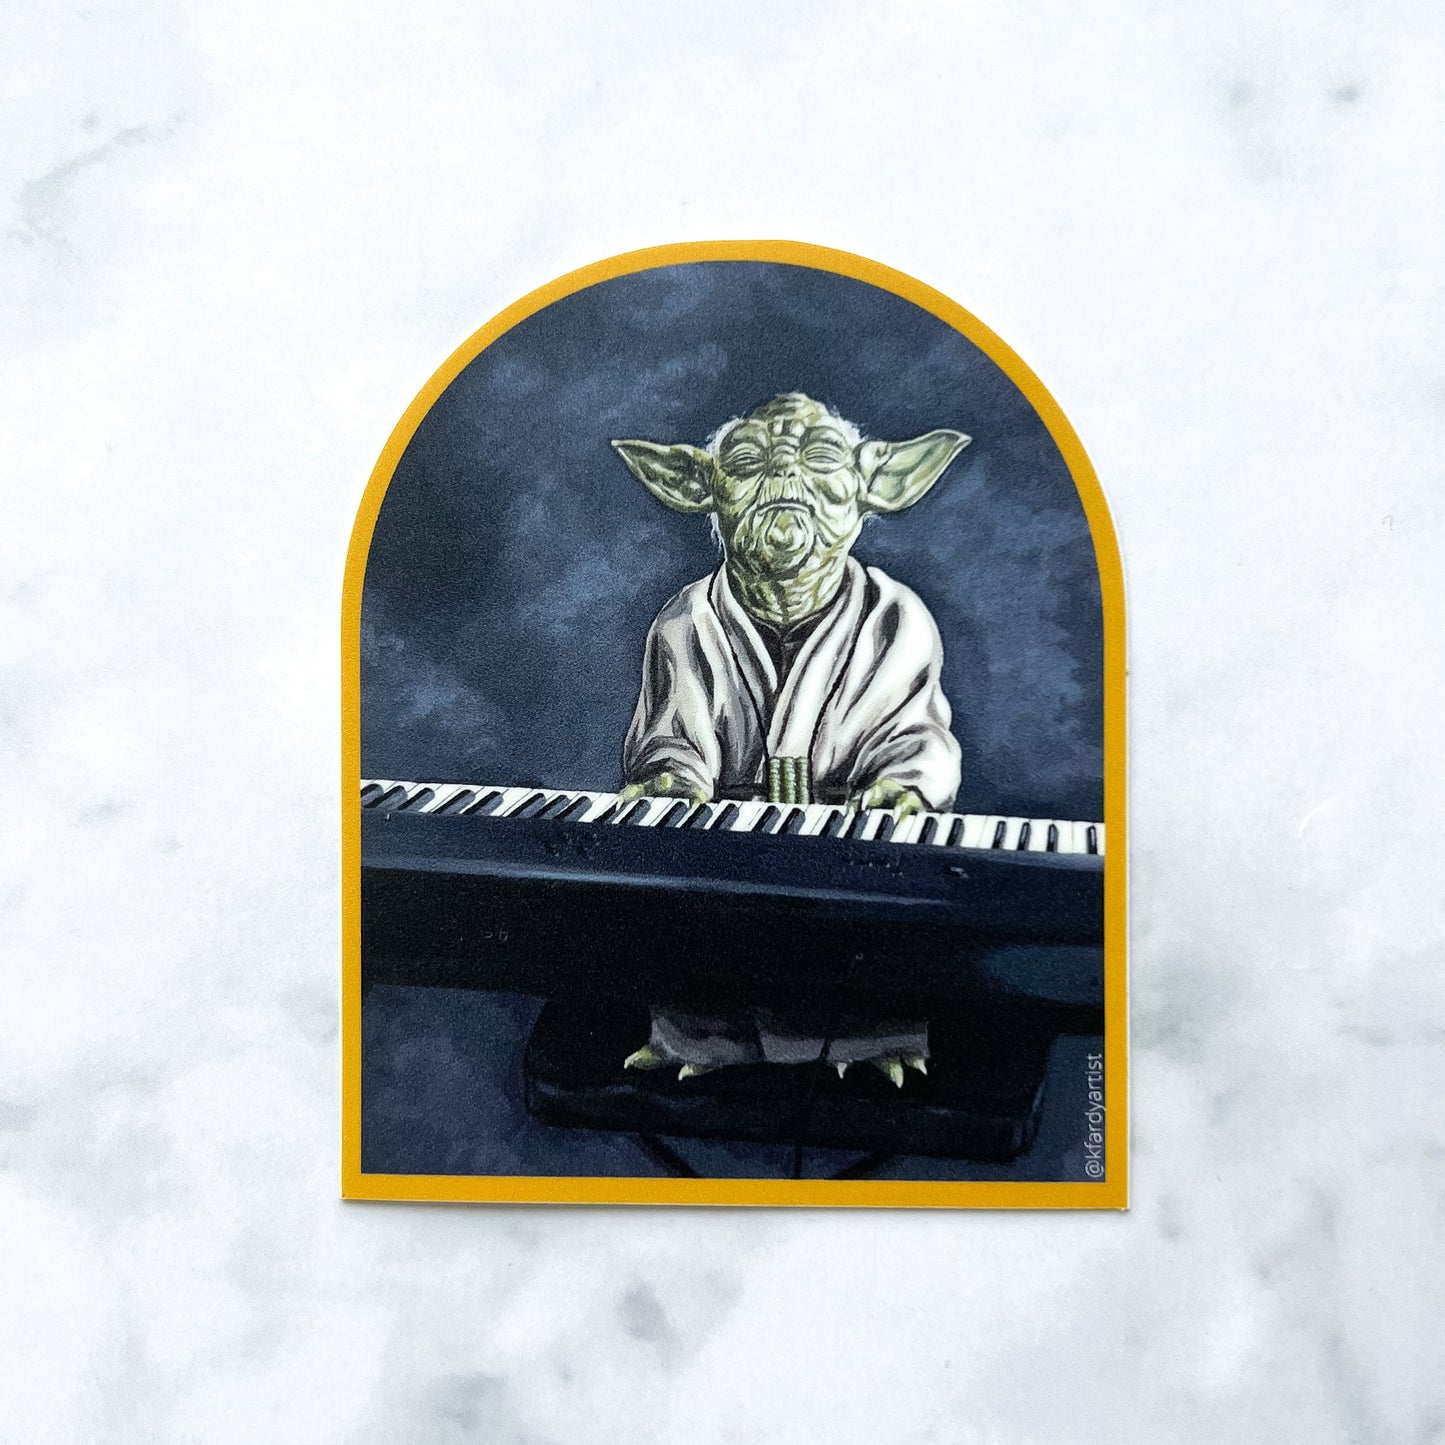 Yoda Playing the Piano vinyl art sticker